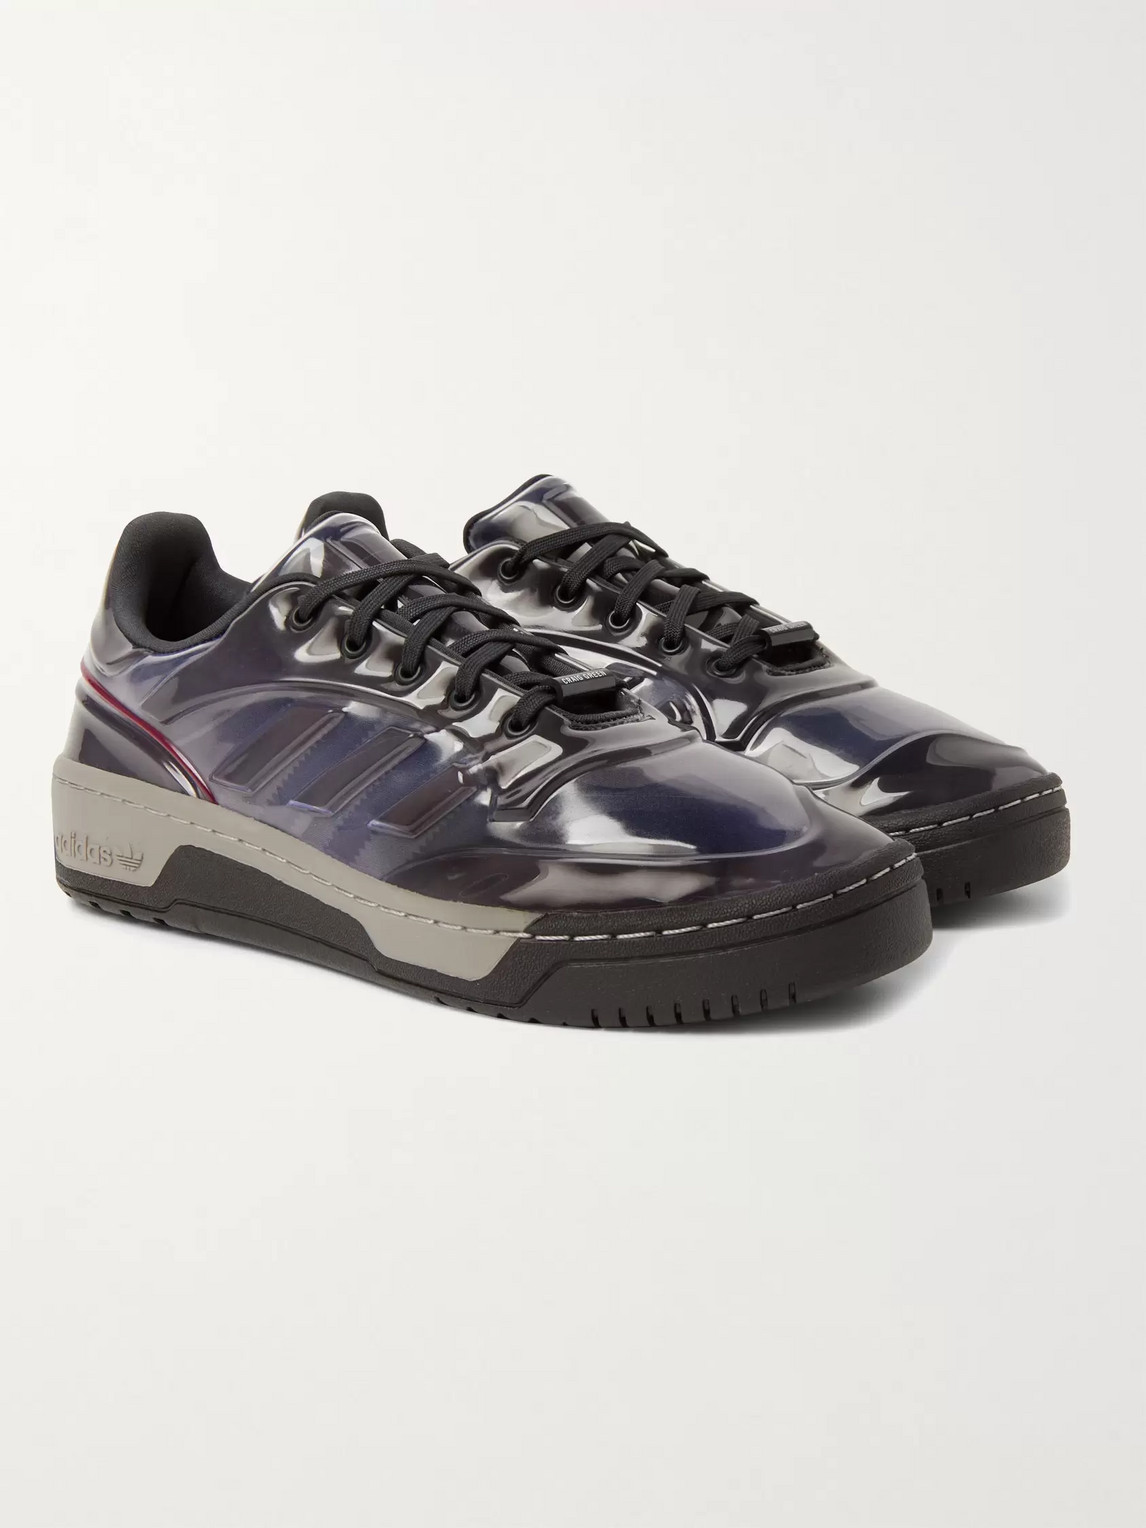 Adidas Consortium Craig Green Polta Akh Iii Tpu And Neoprene Sneakers In Gray